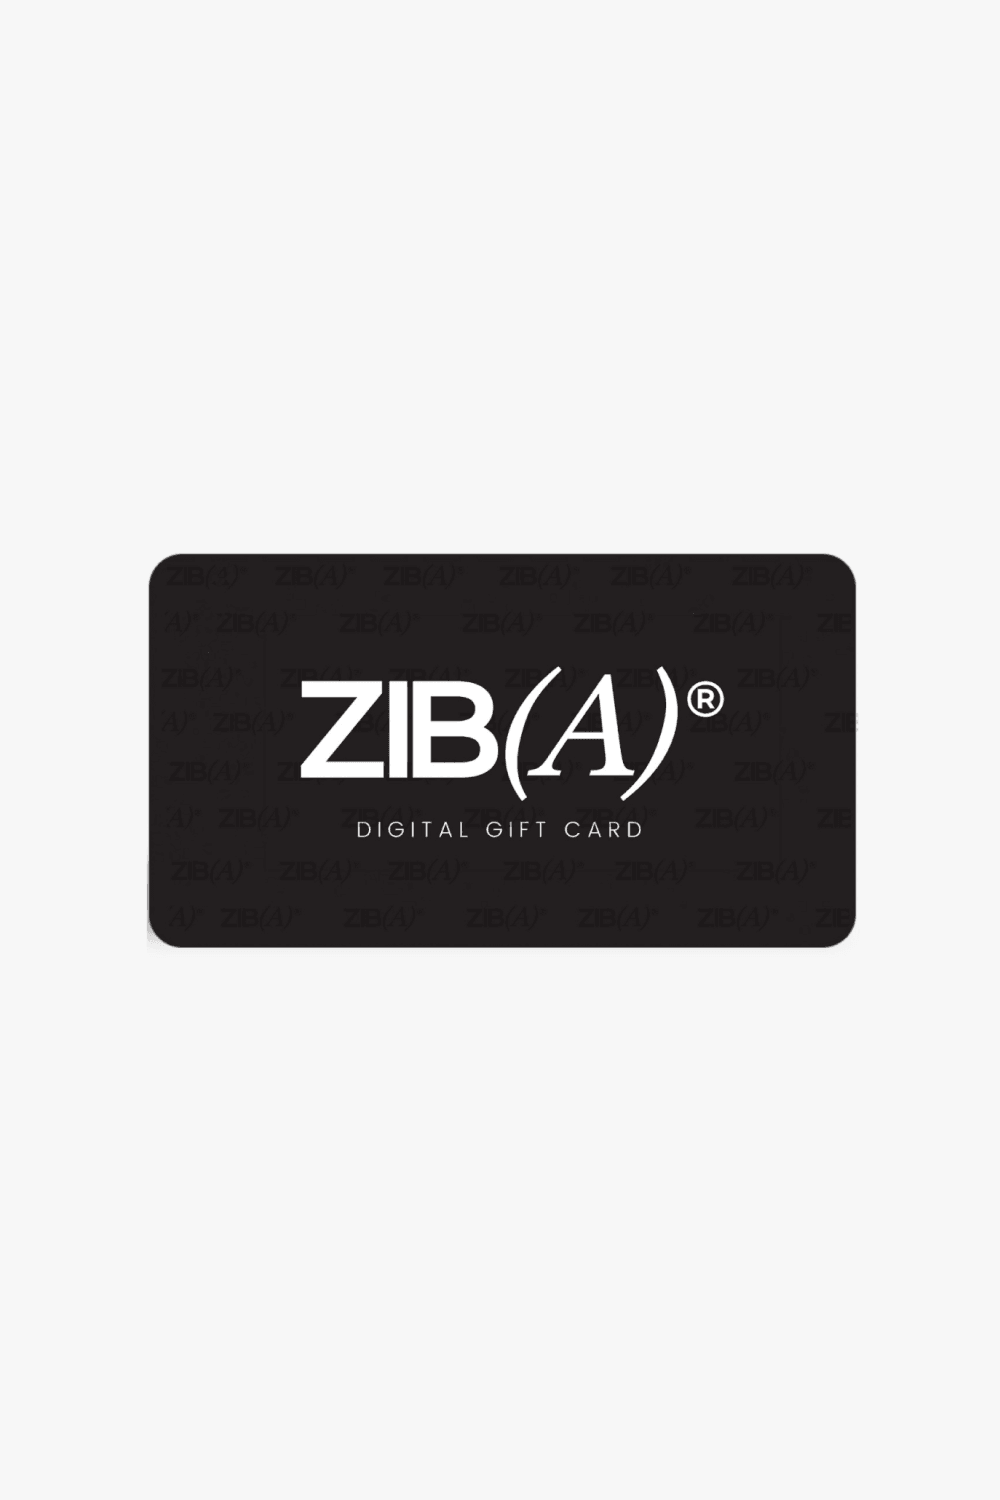 DIGITAL GIFT CARD - Ziba Activewear